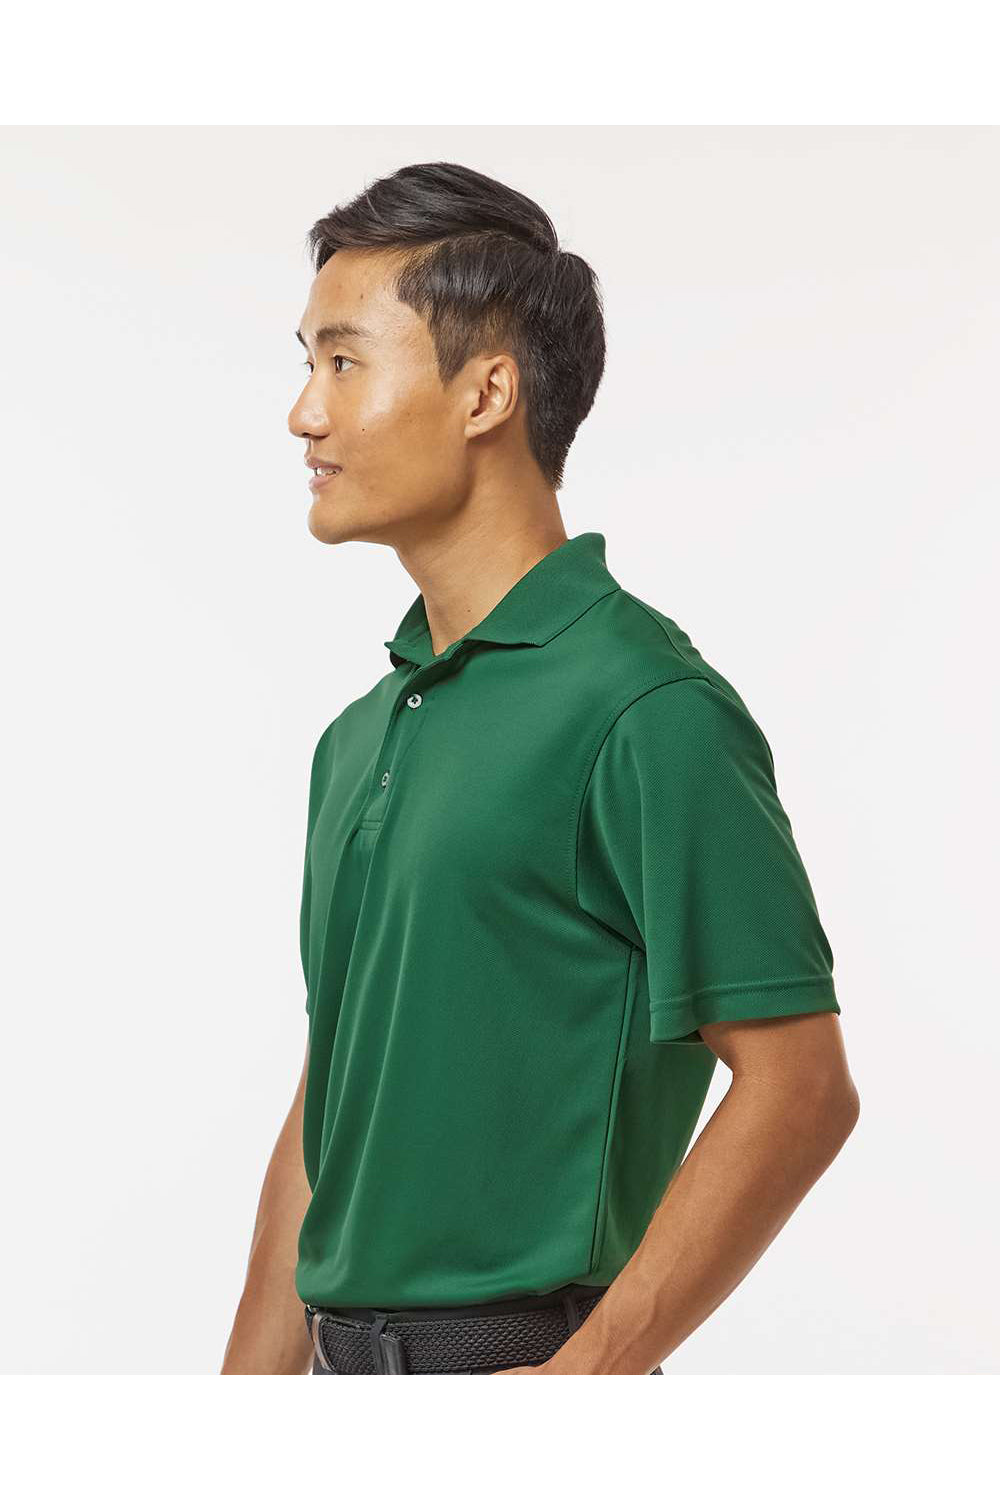 Paragon 100 Mens Saratoga Performance Mini Mesh Short Sleeve Polo Shirt Hunter Green Model Side